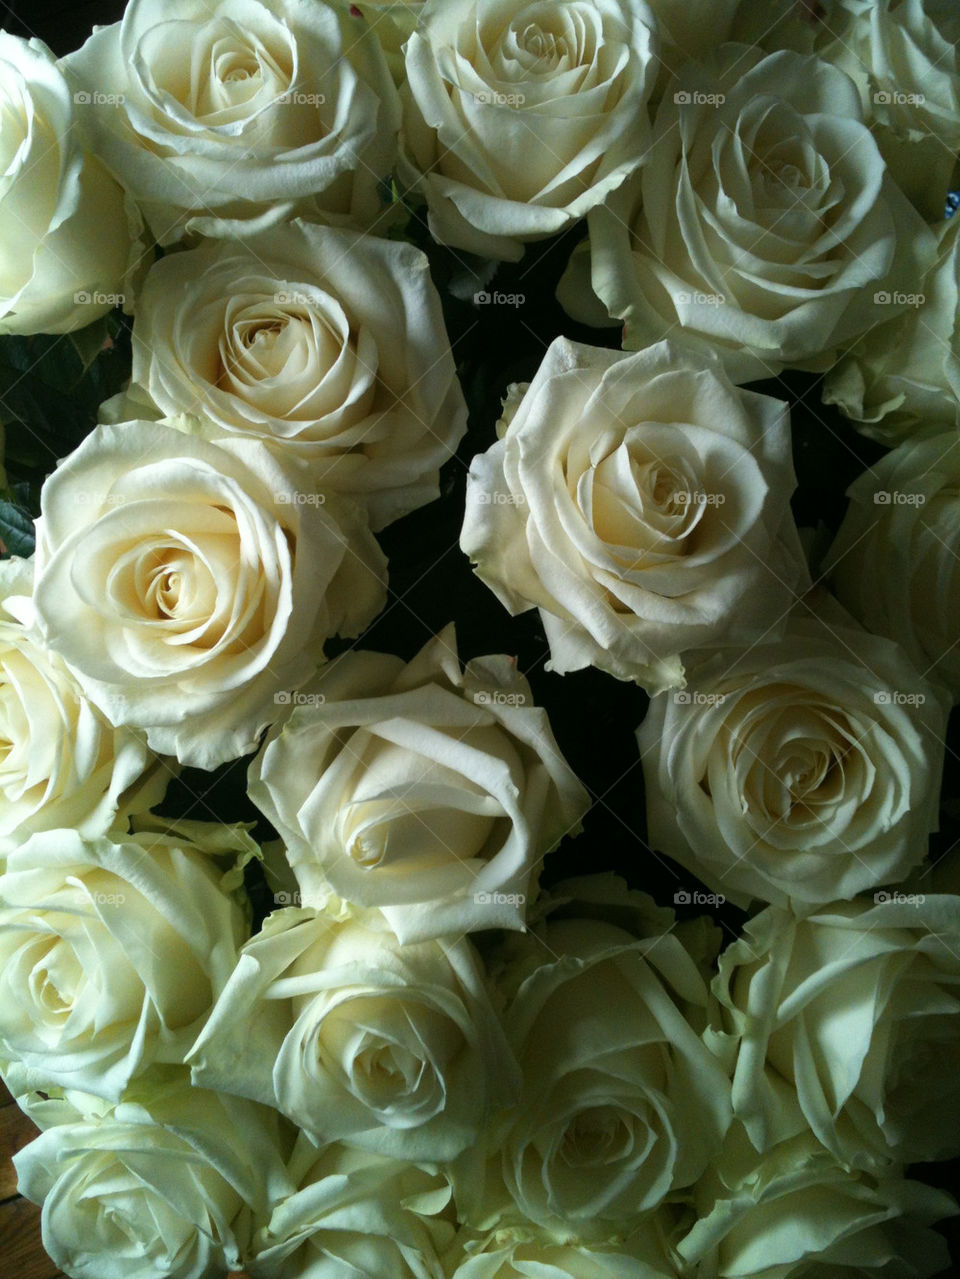 flowers flower white roses by rr27